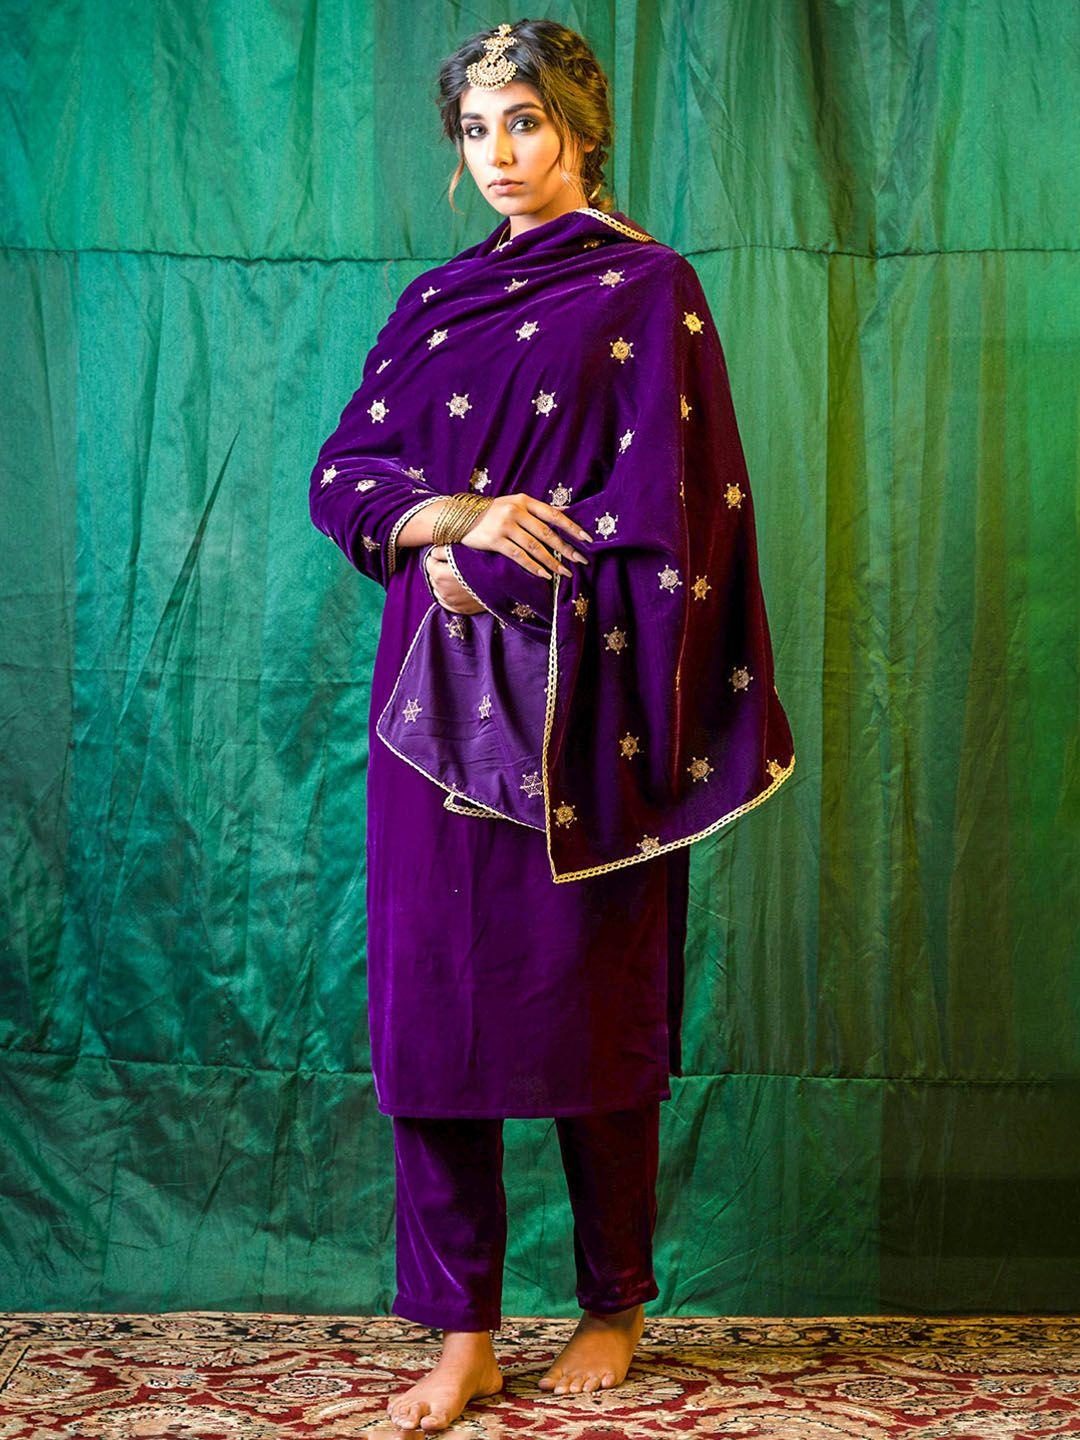 nangalia ruchira women embroidery velvet shawl